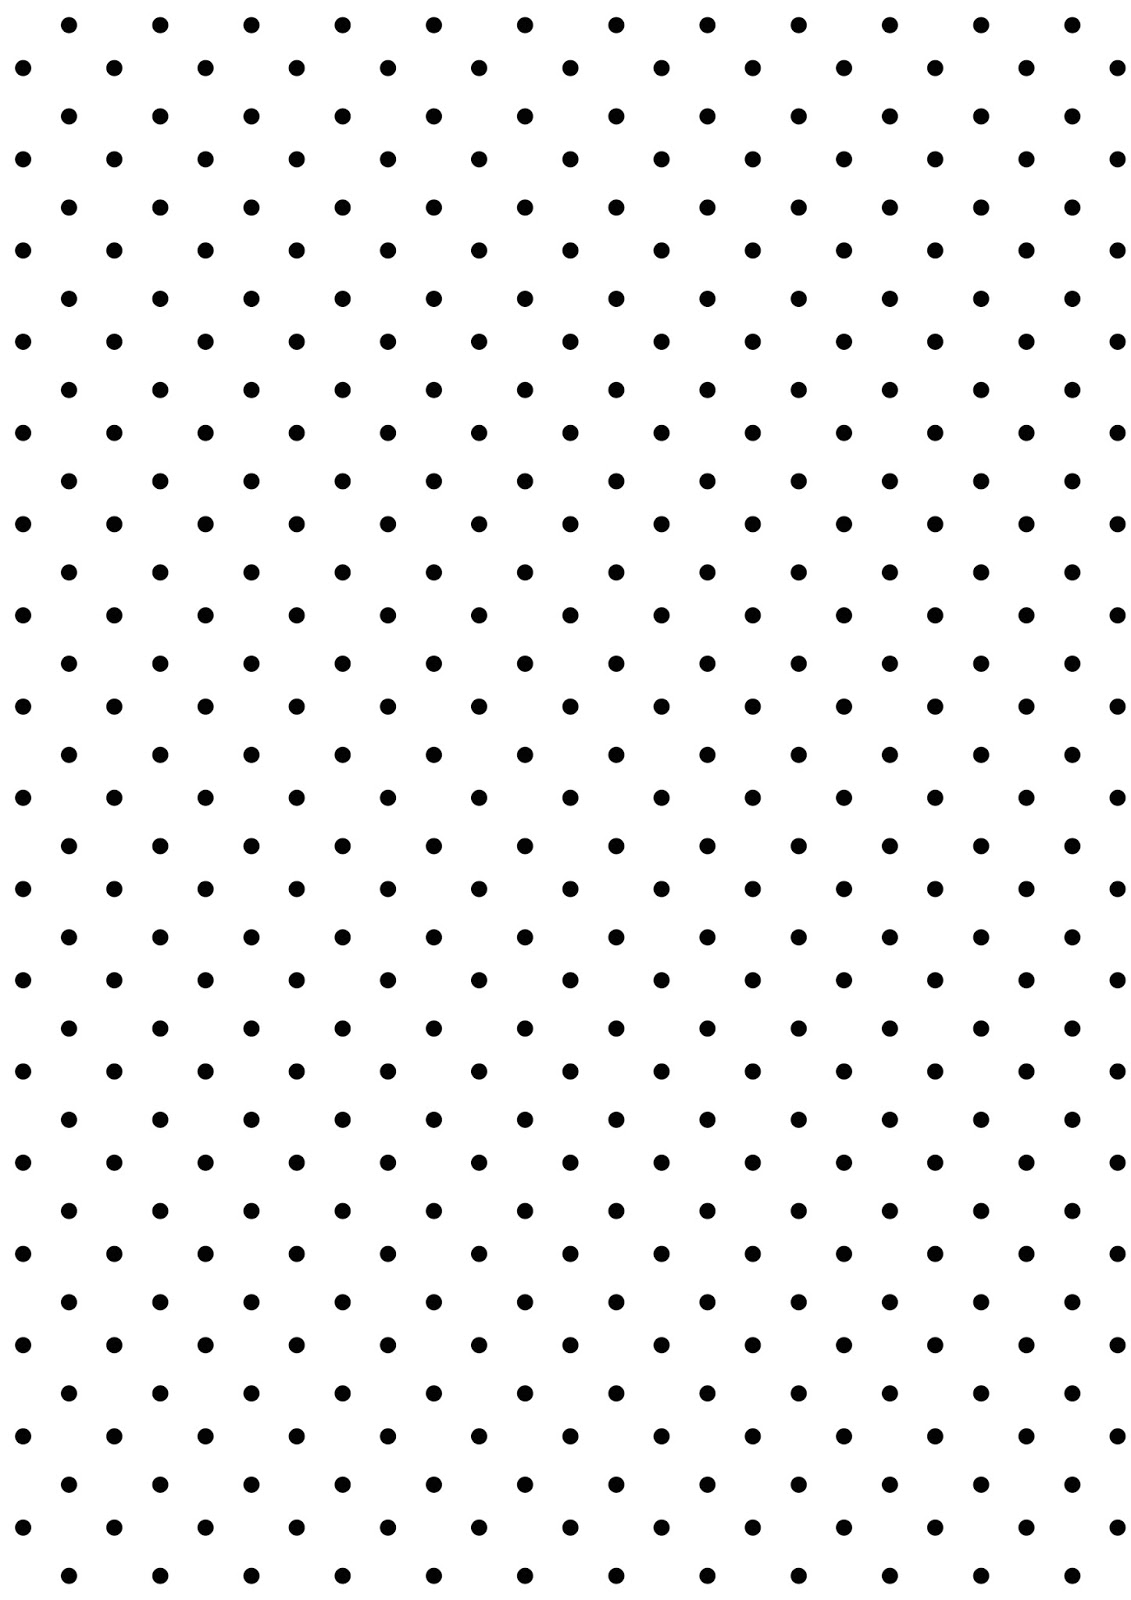 5 Best Images of Black Polka Dot Border Paper Printable - Black and ...